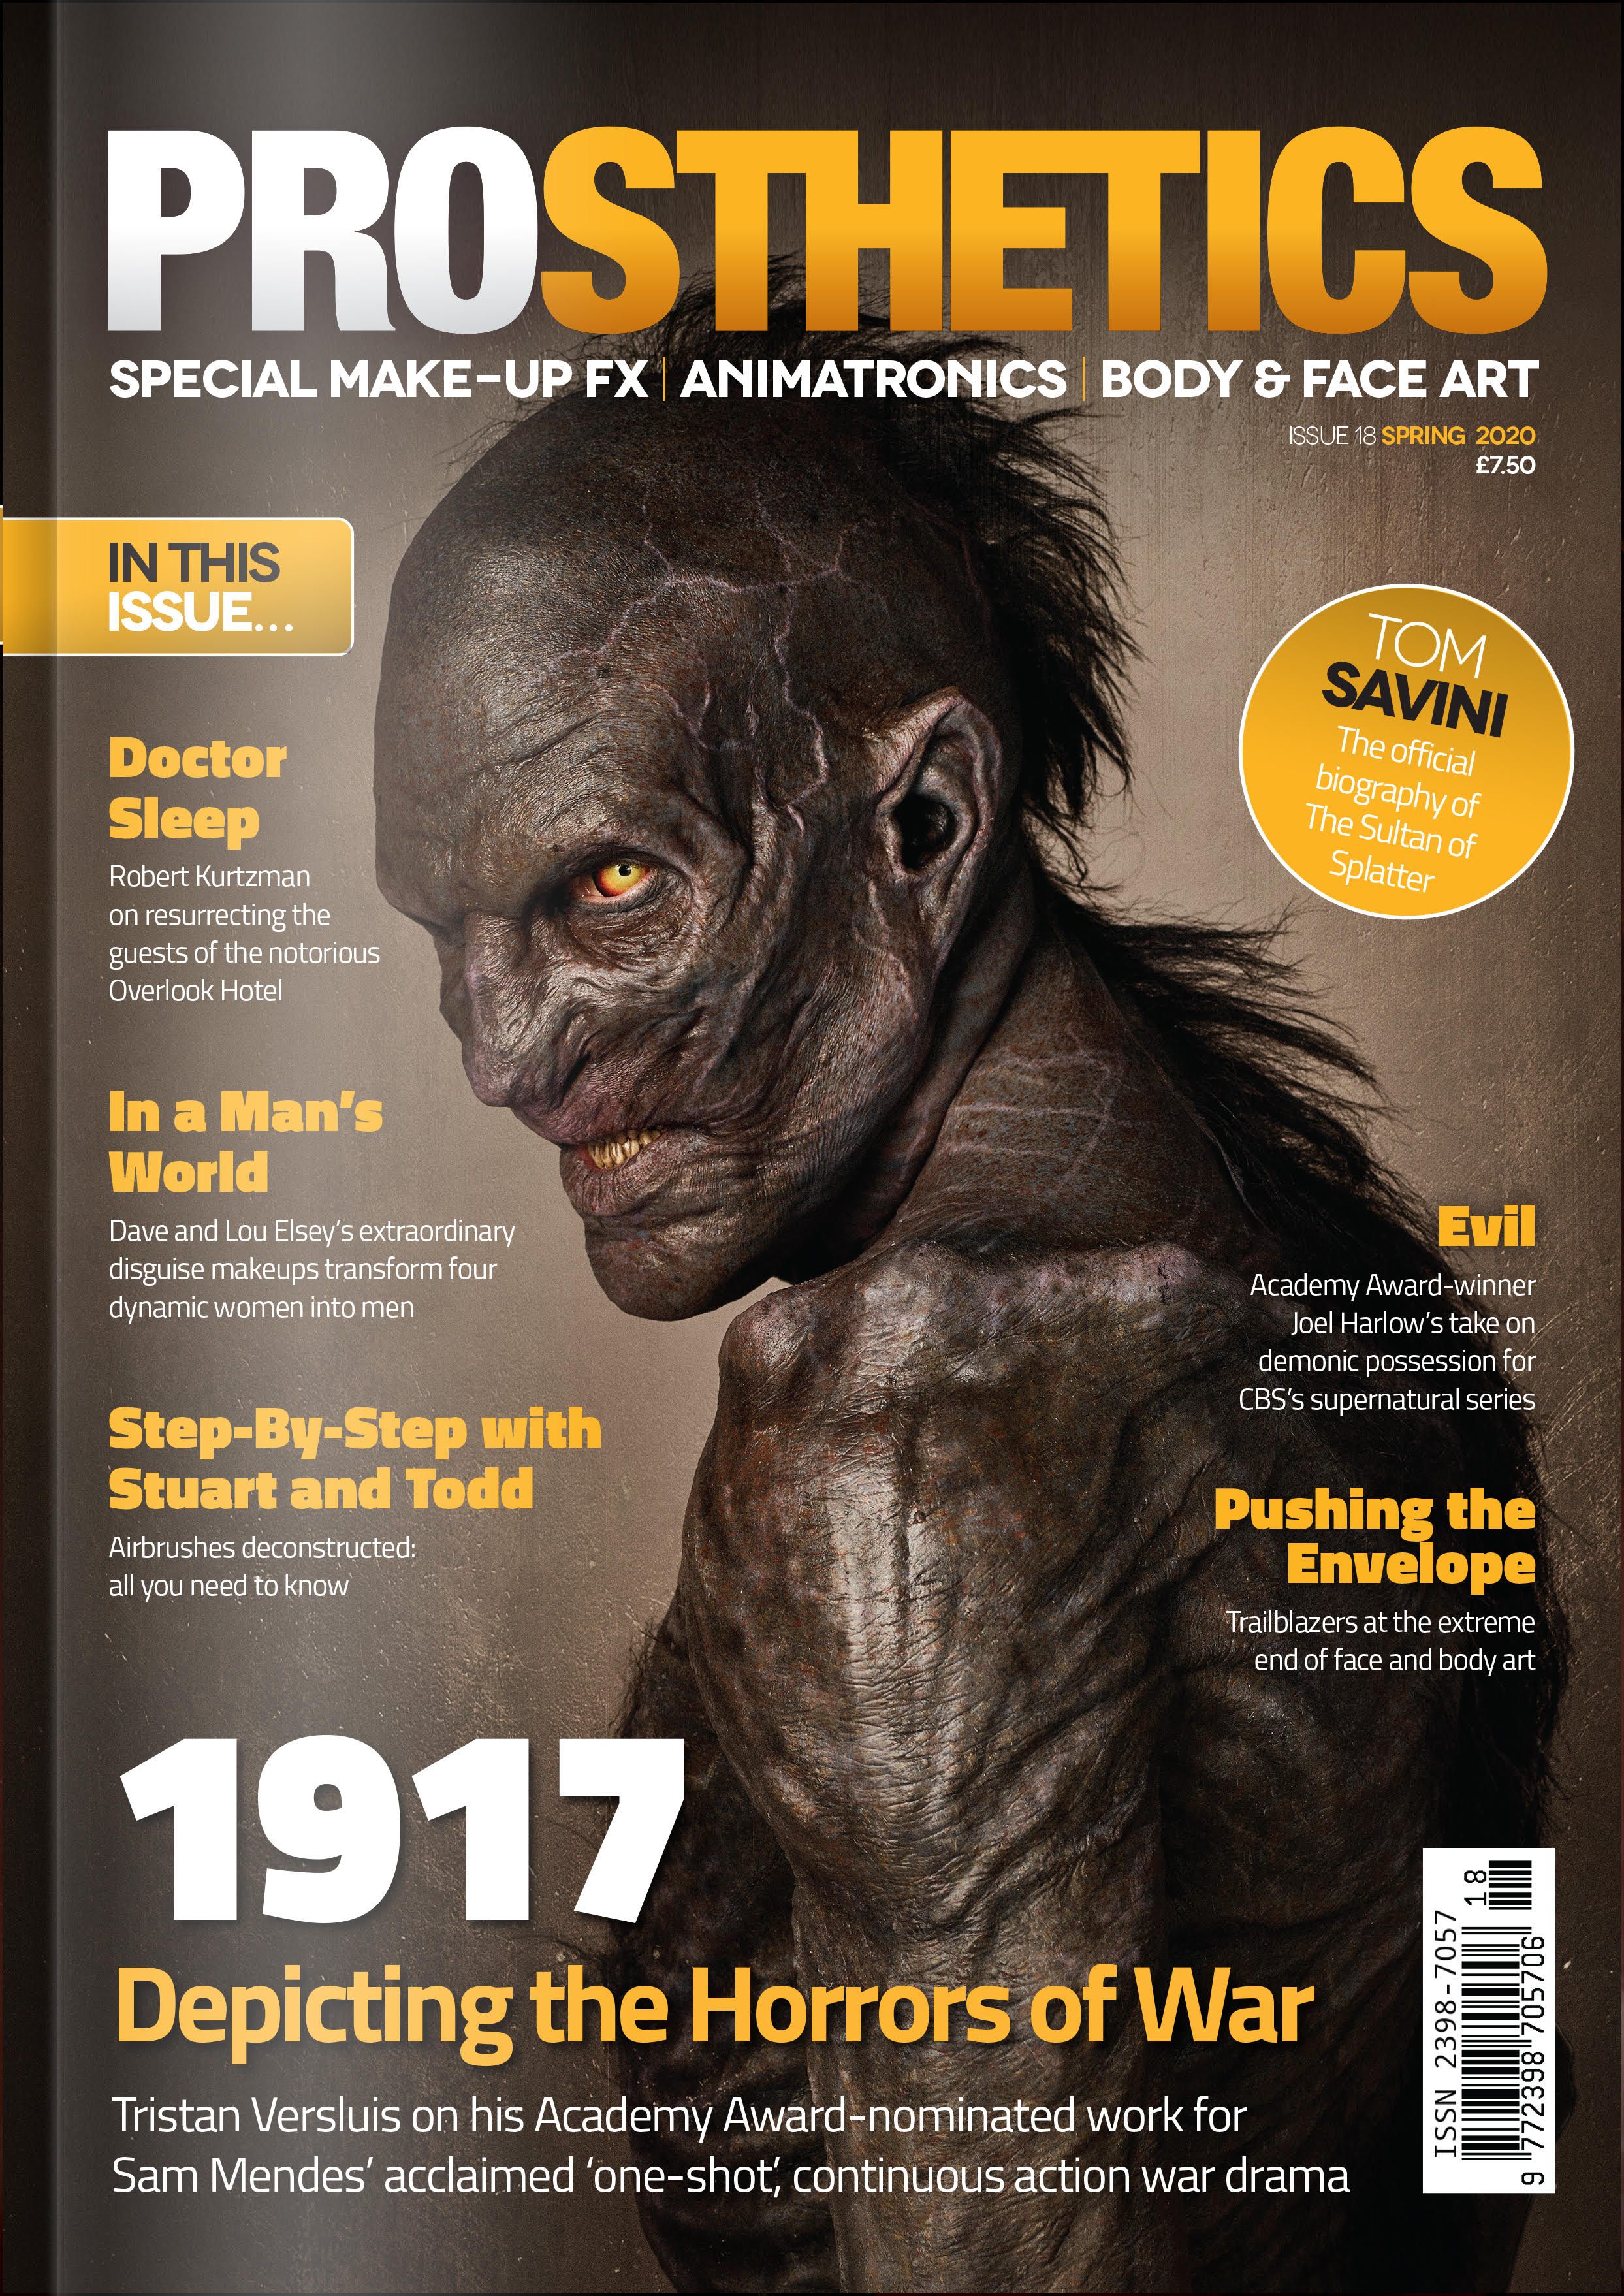 The Prosthetics Magazine (Issue 18 - Spring 2020) - Titanic FX